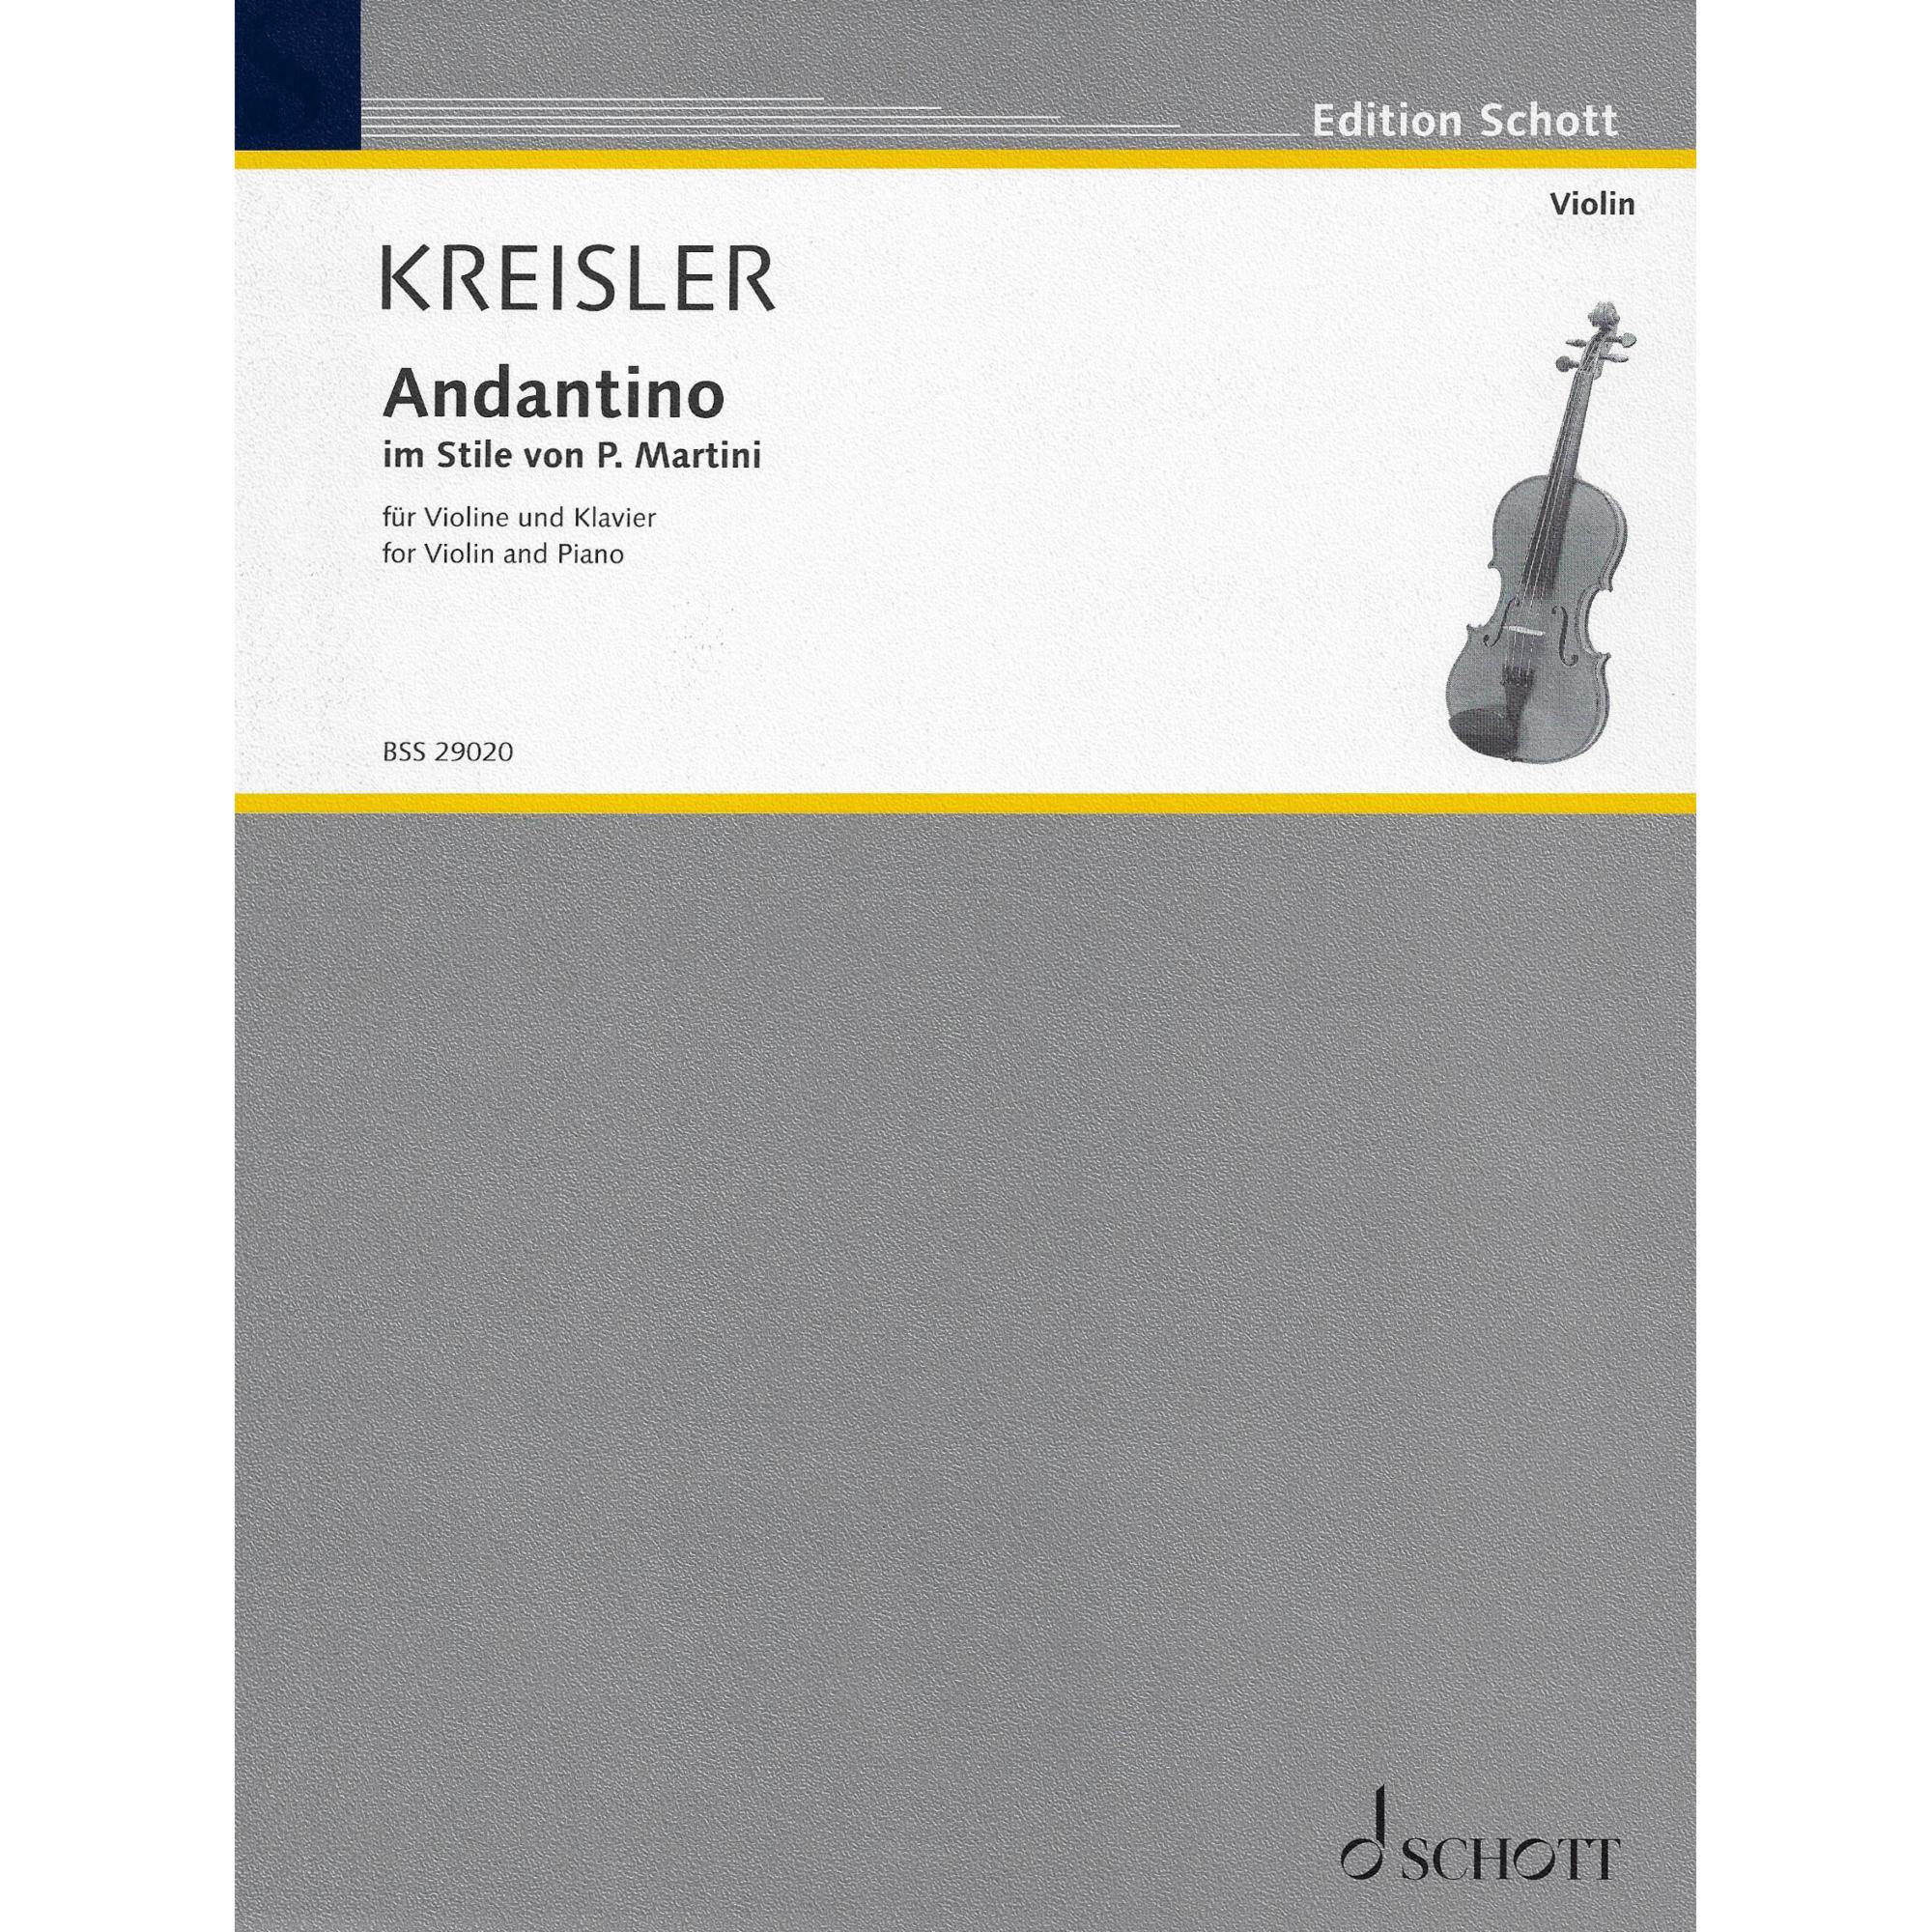 Kreisler -- Andantino for Violin and Piano